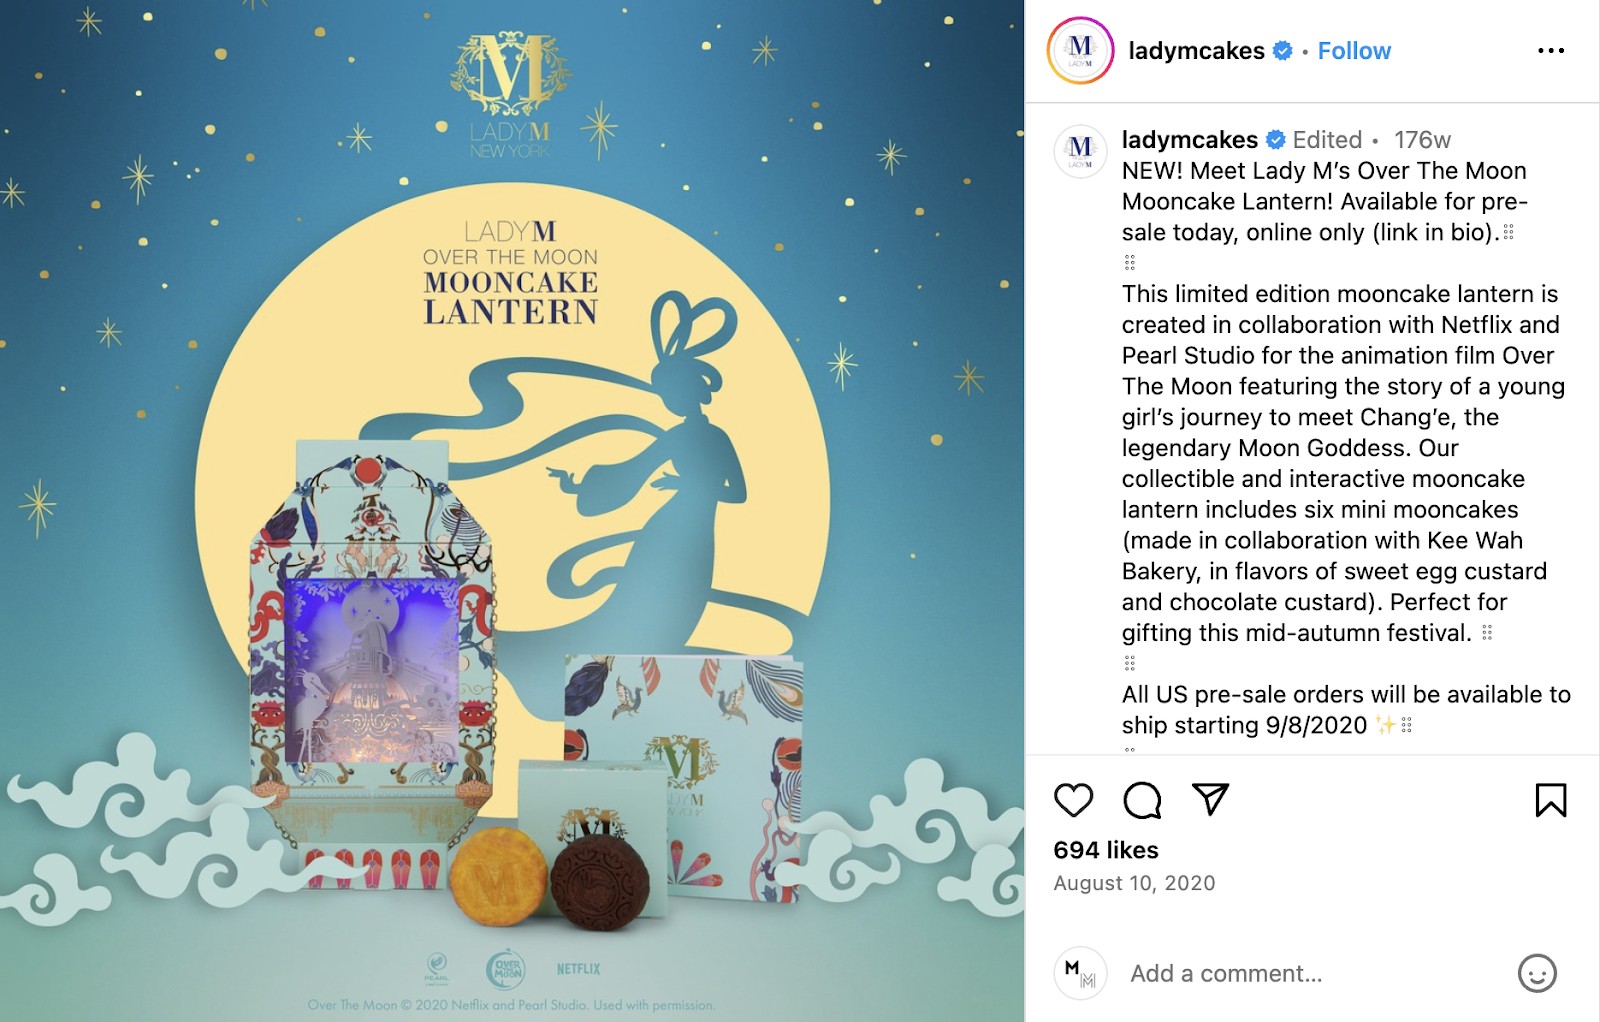 Restaurant marketing ideas: Dessert brand Lady M created a limited edition mooncake lantern in partnership with Netflix. 